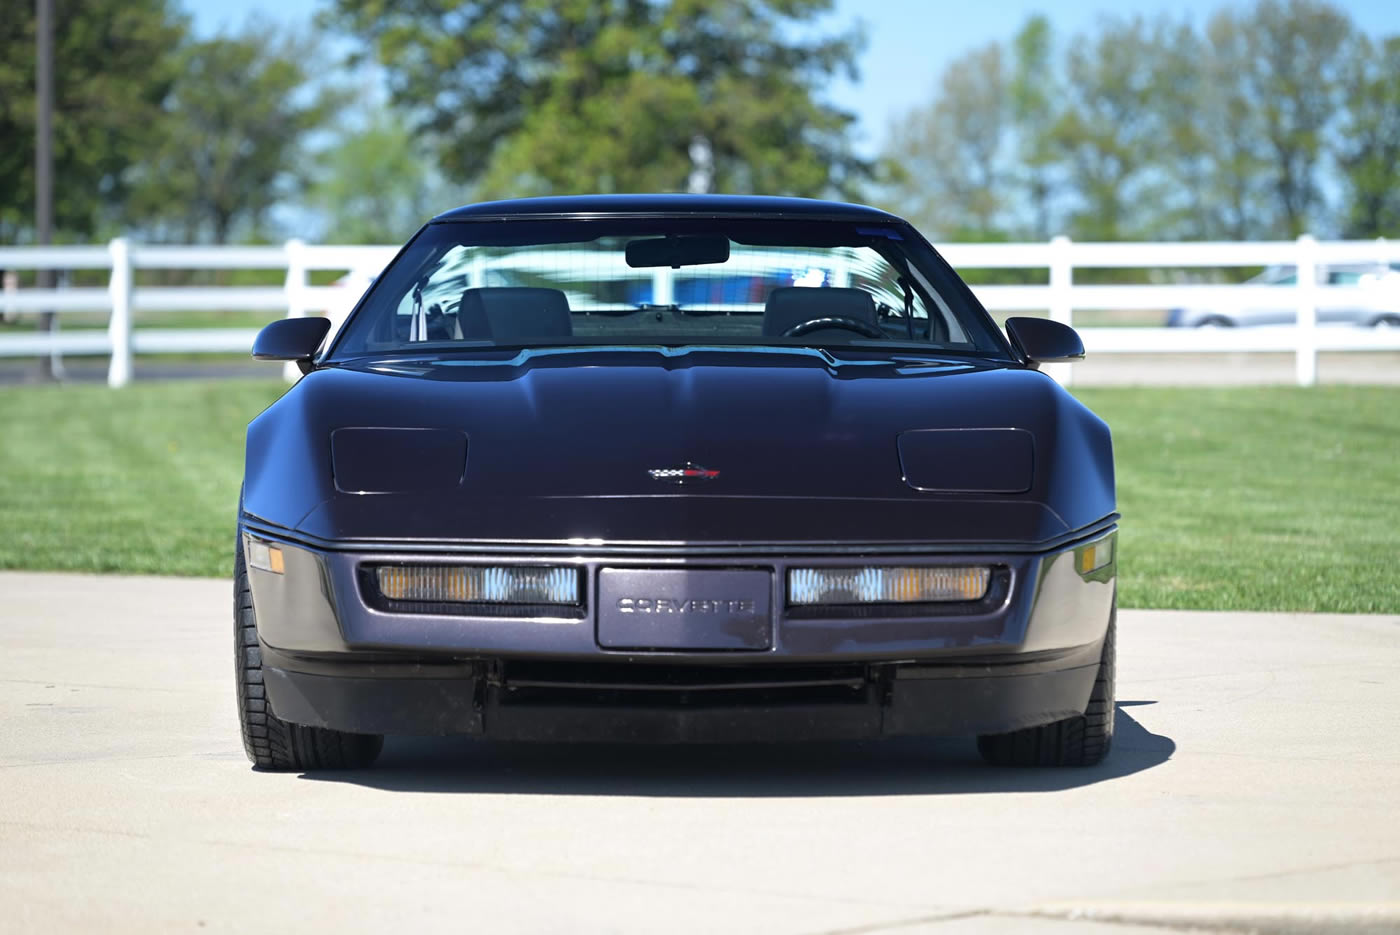 1988 Corvette Coupe in Charcoal Metallic